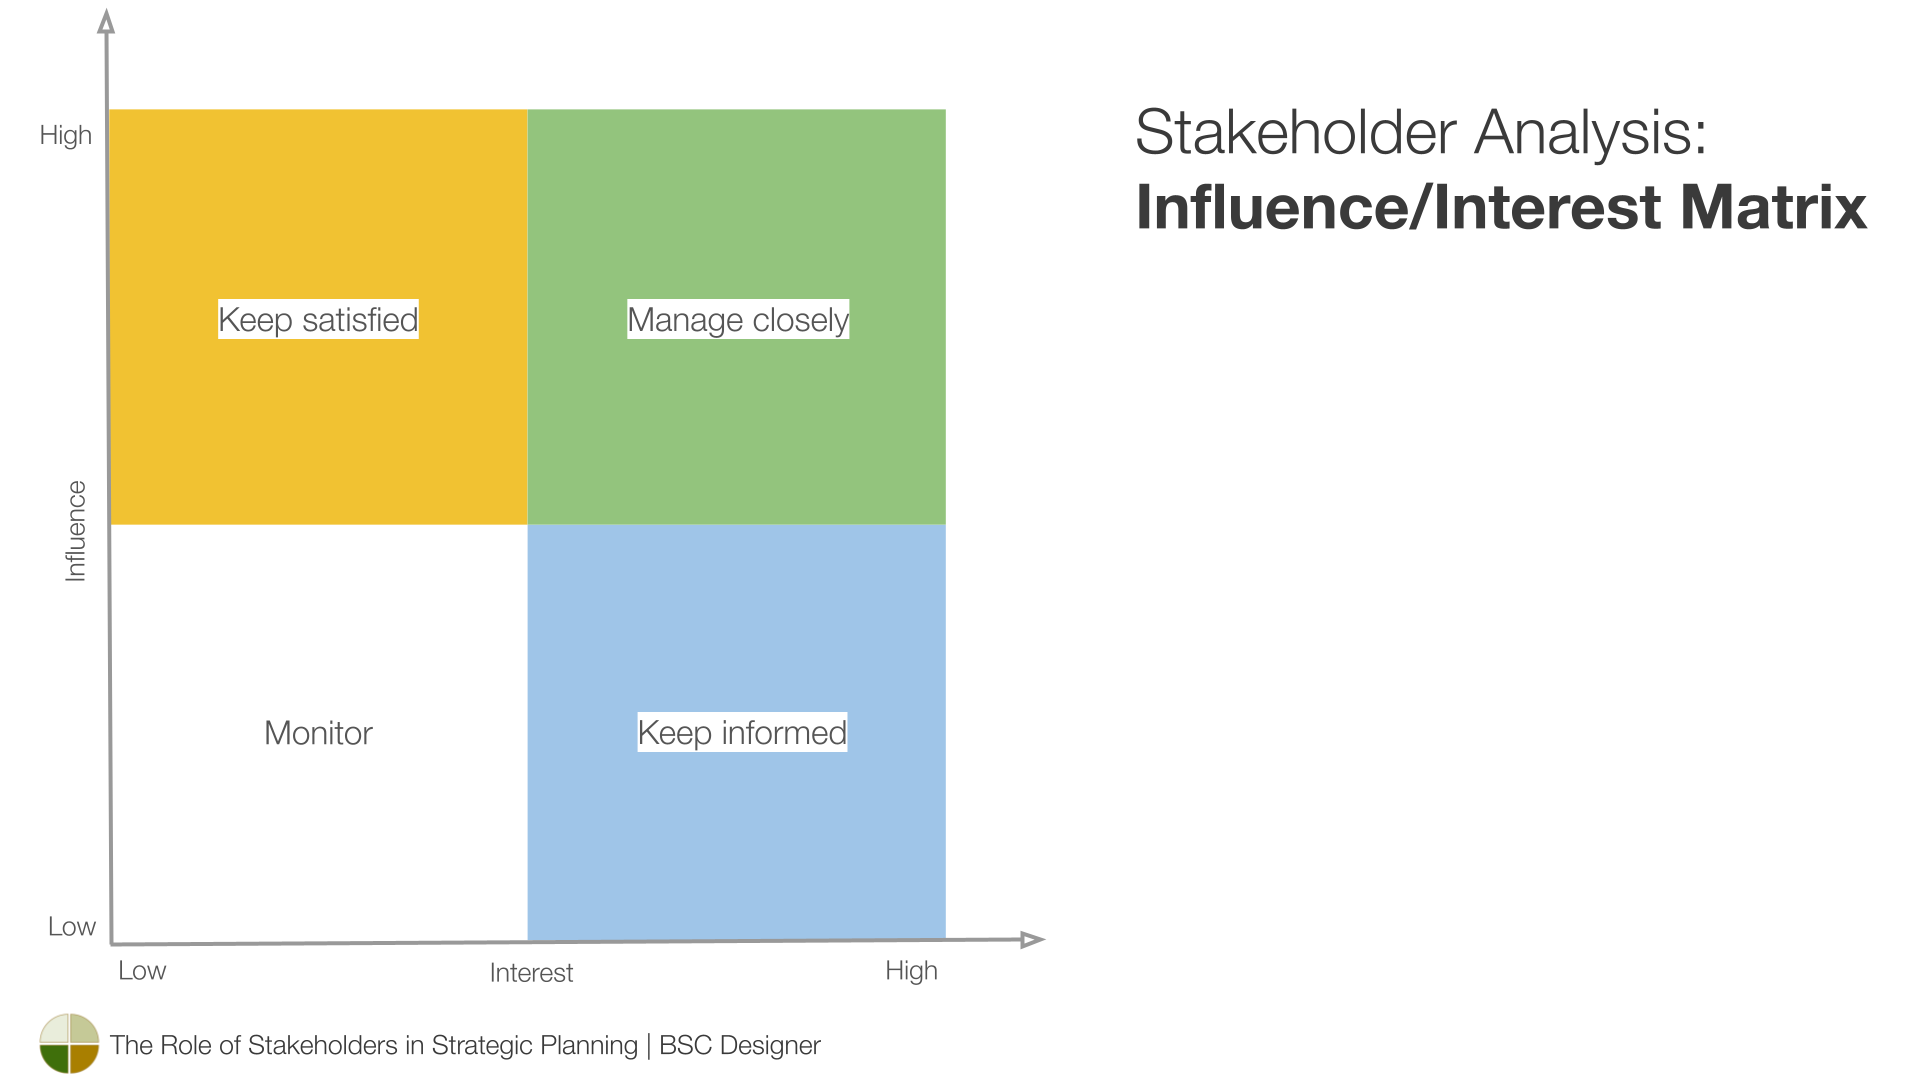 Stakeholder Analysis: Influence/Interest Matrix